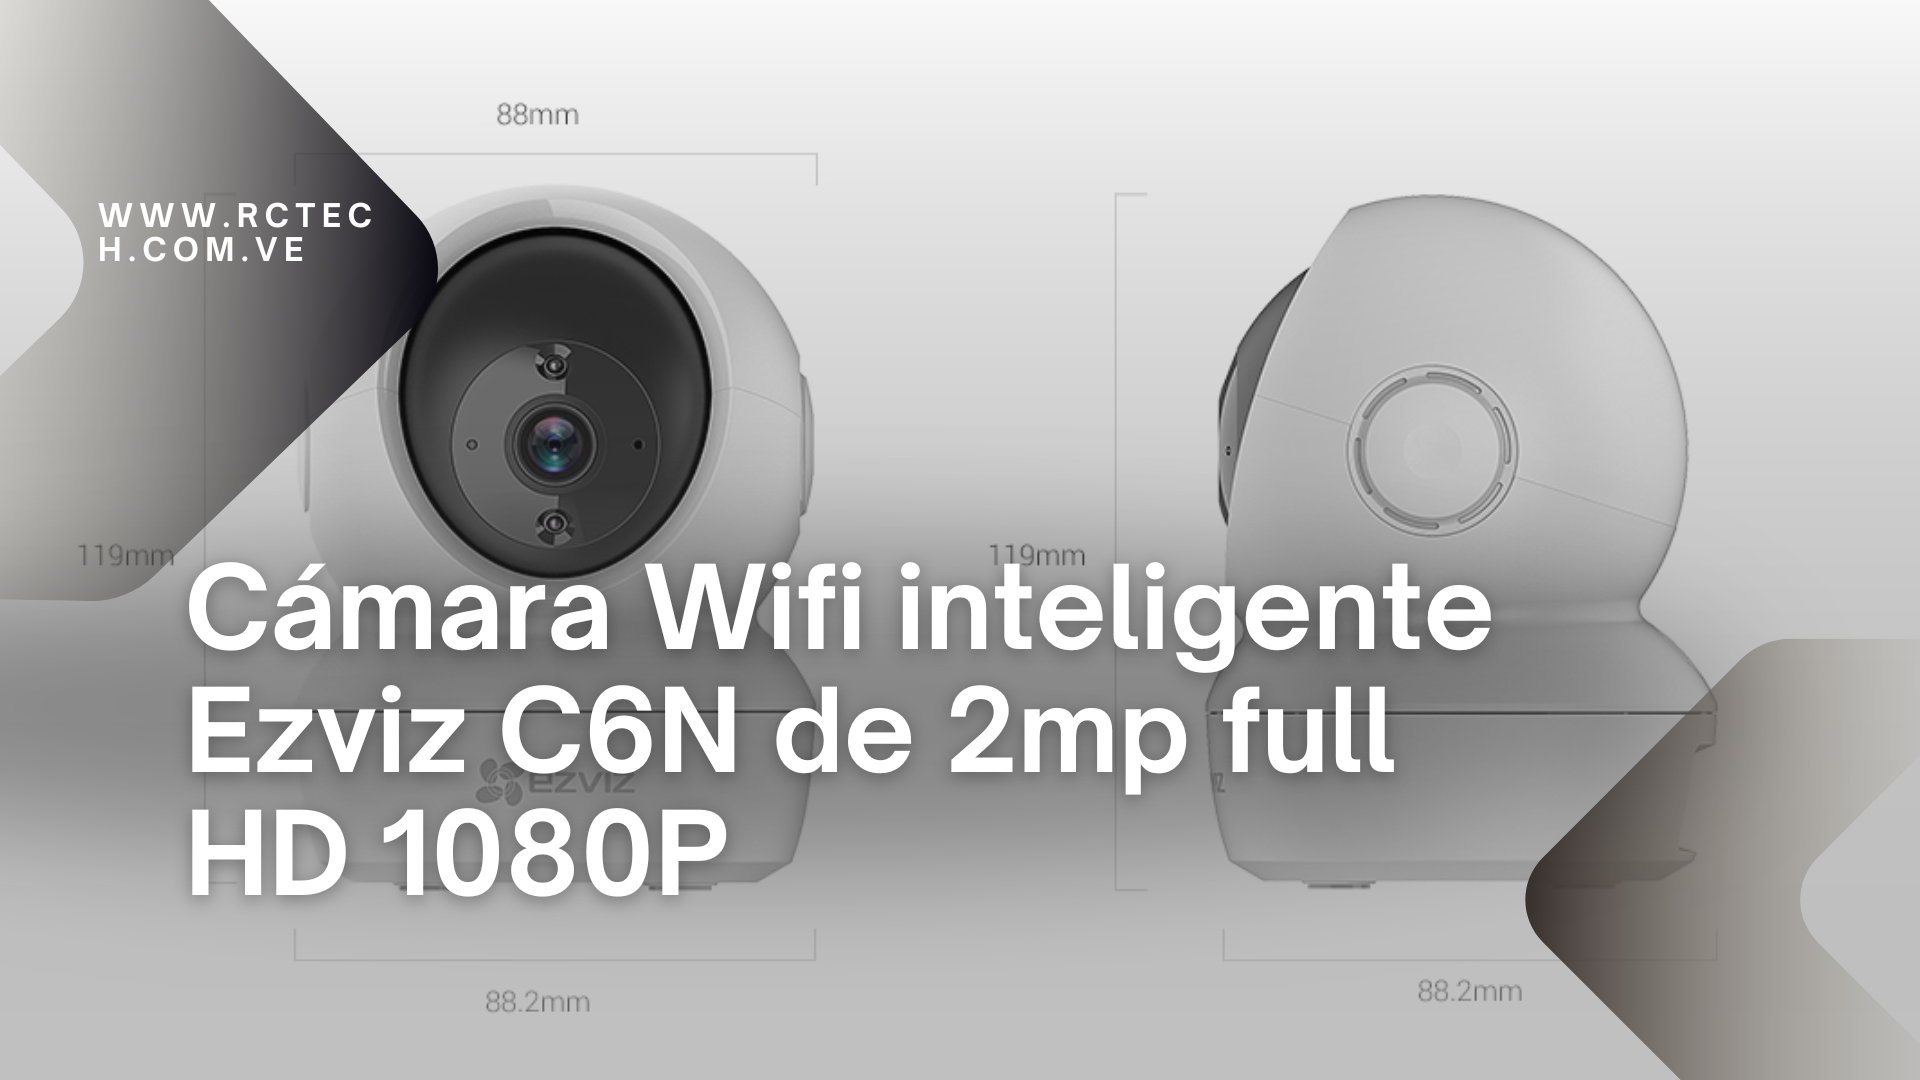 Cámara Wifi inteligente Ezviz C6N de 2mp full HD 1080P